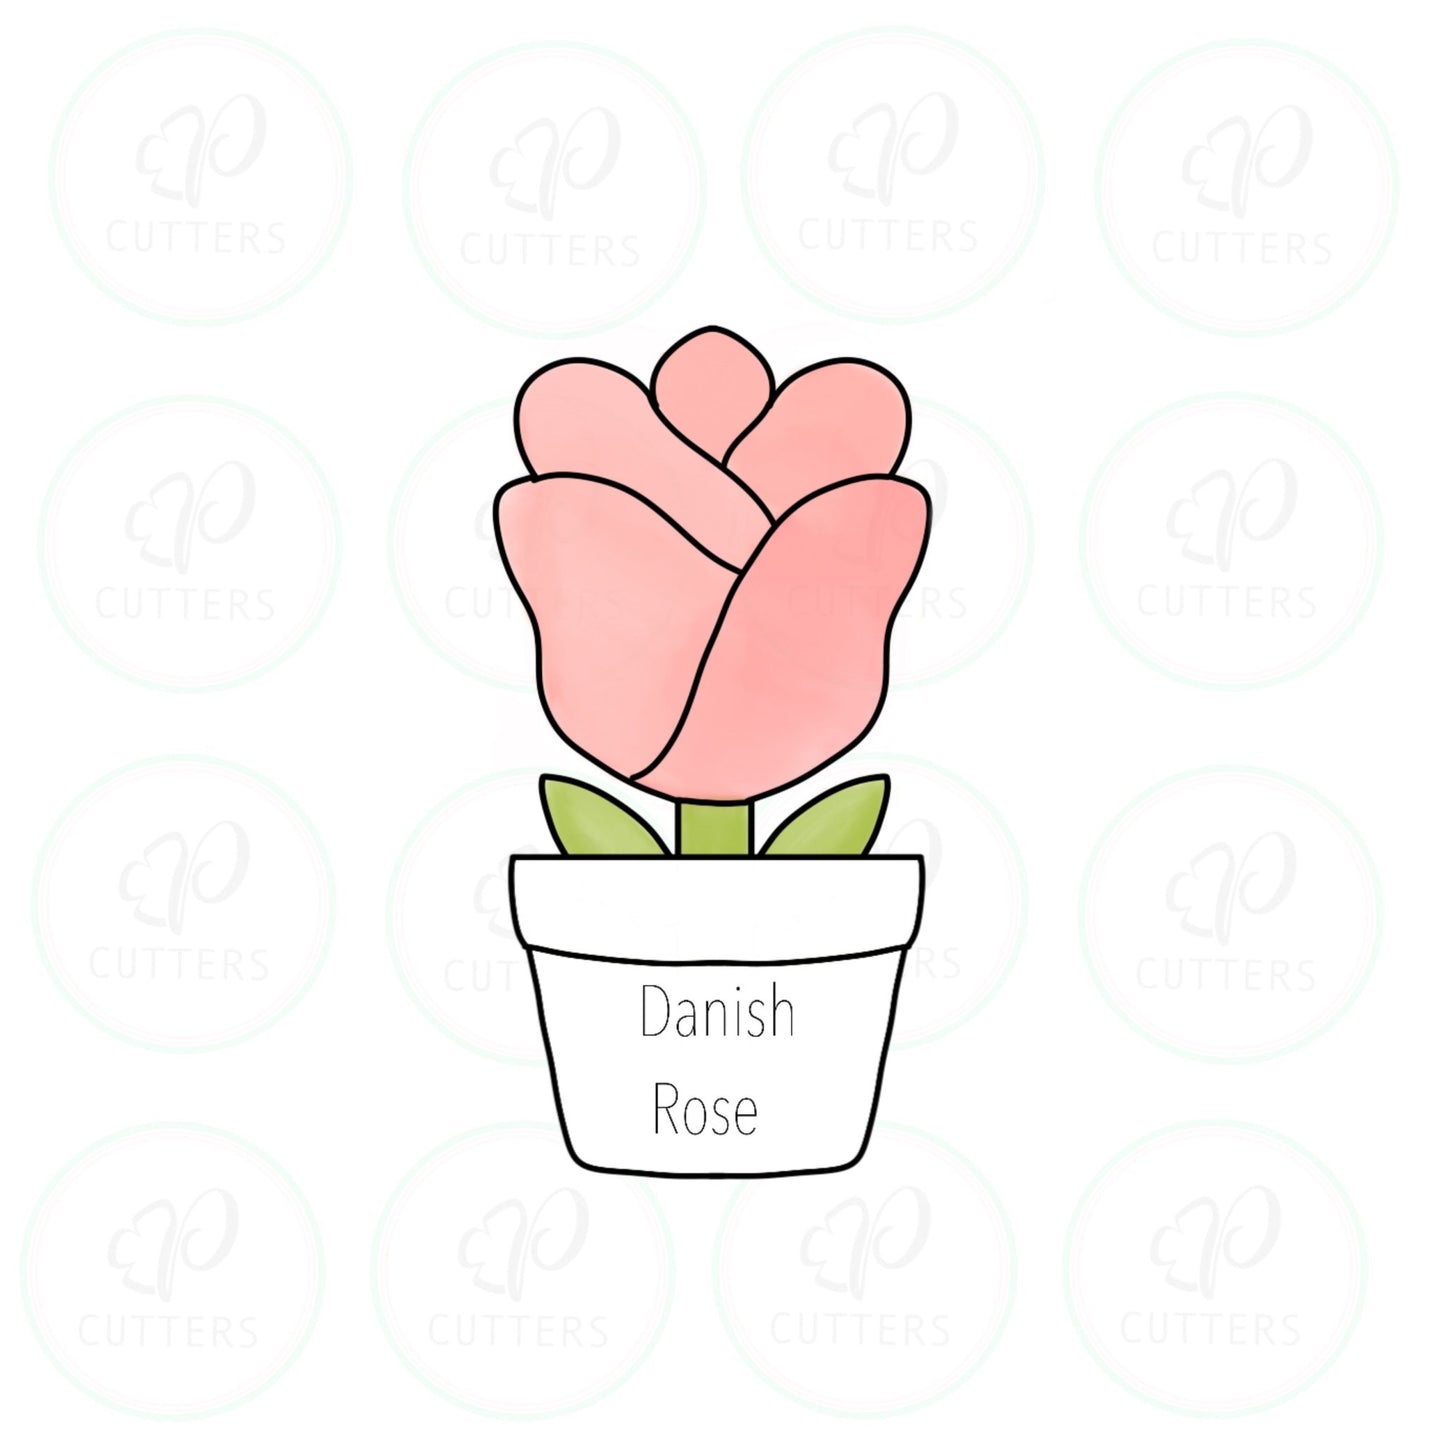 Danish Rose Flower in a Pot Cookie Cutter - Periwinkles Cutters